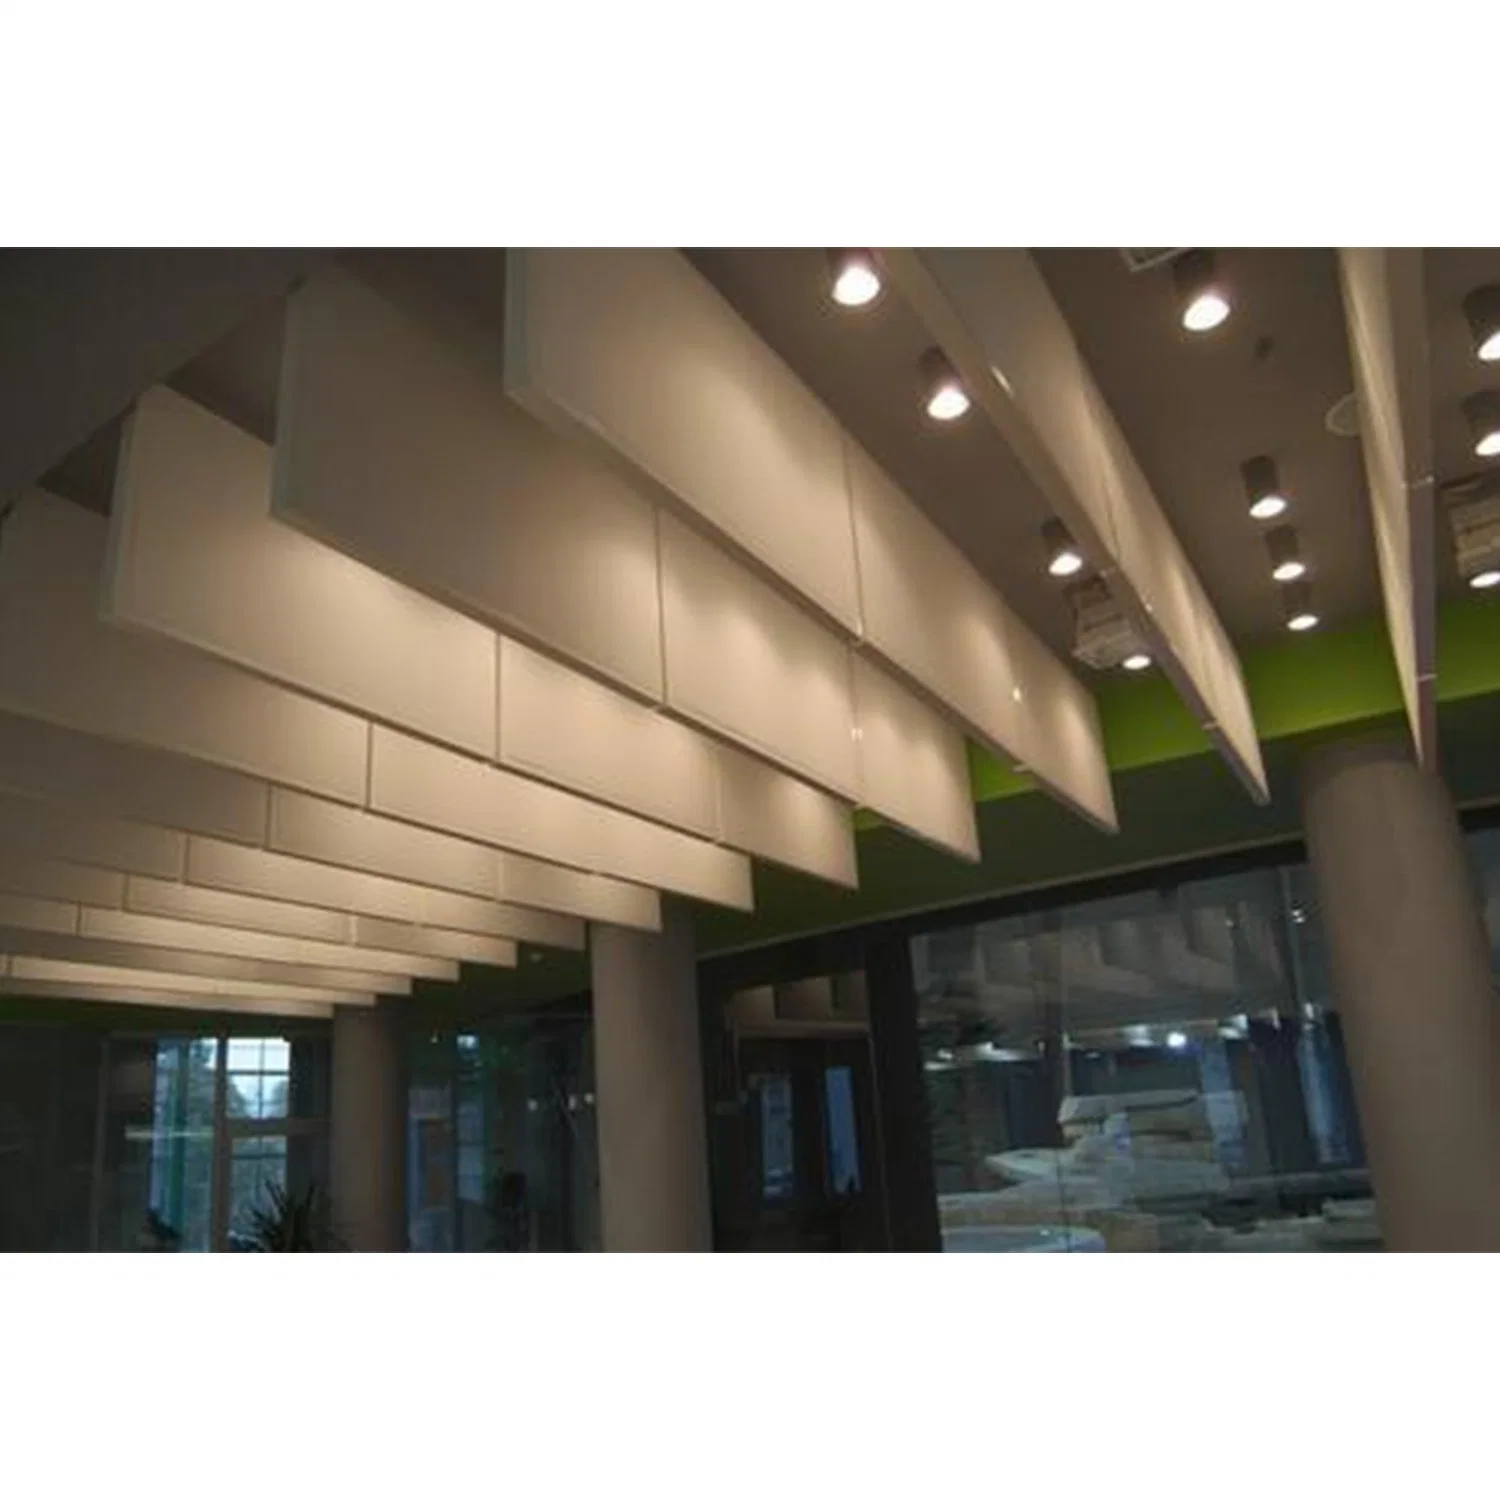 Sound Absorbing Ceiling Decoration Acoustical Ceiling Panel Acoustic Ceiling Panels Hanging Acoustic Felt Panel